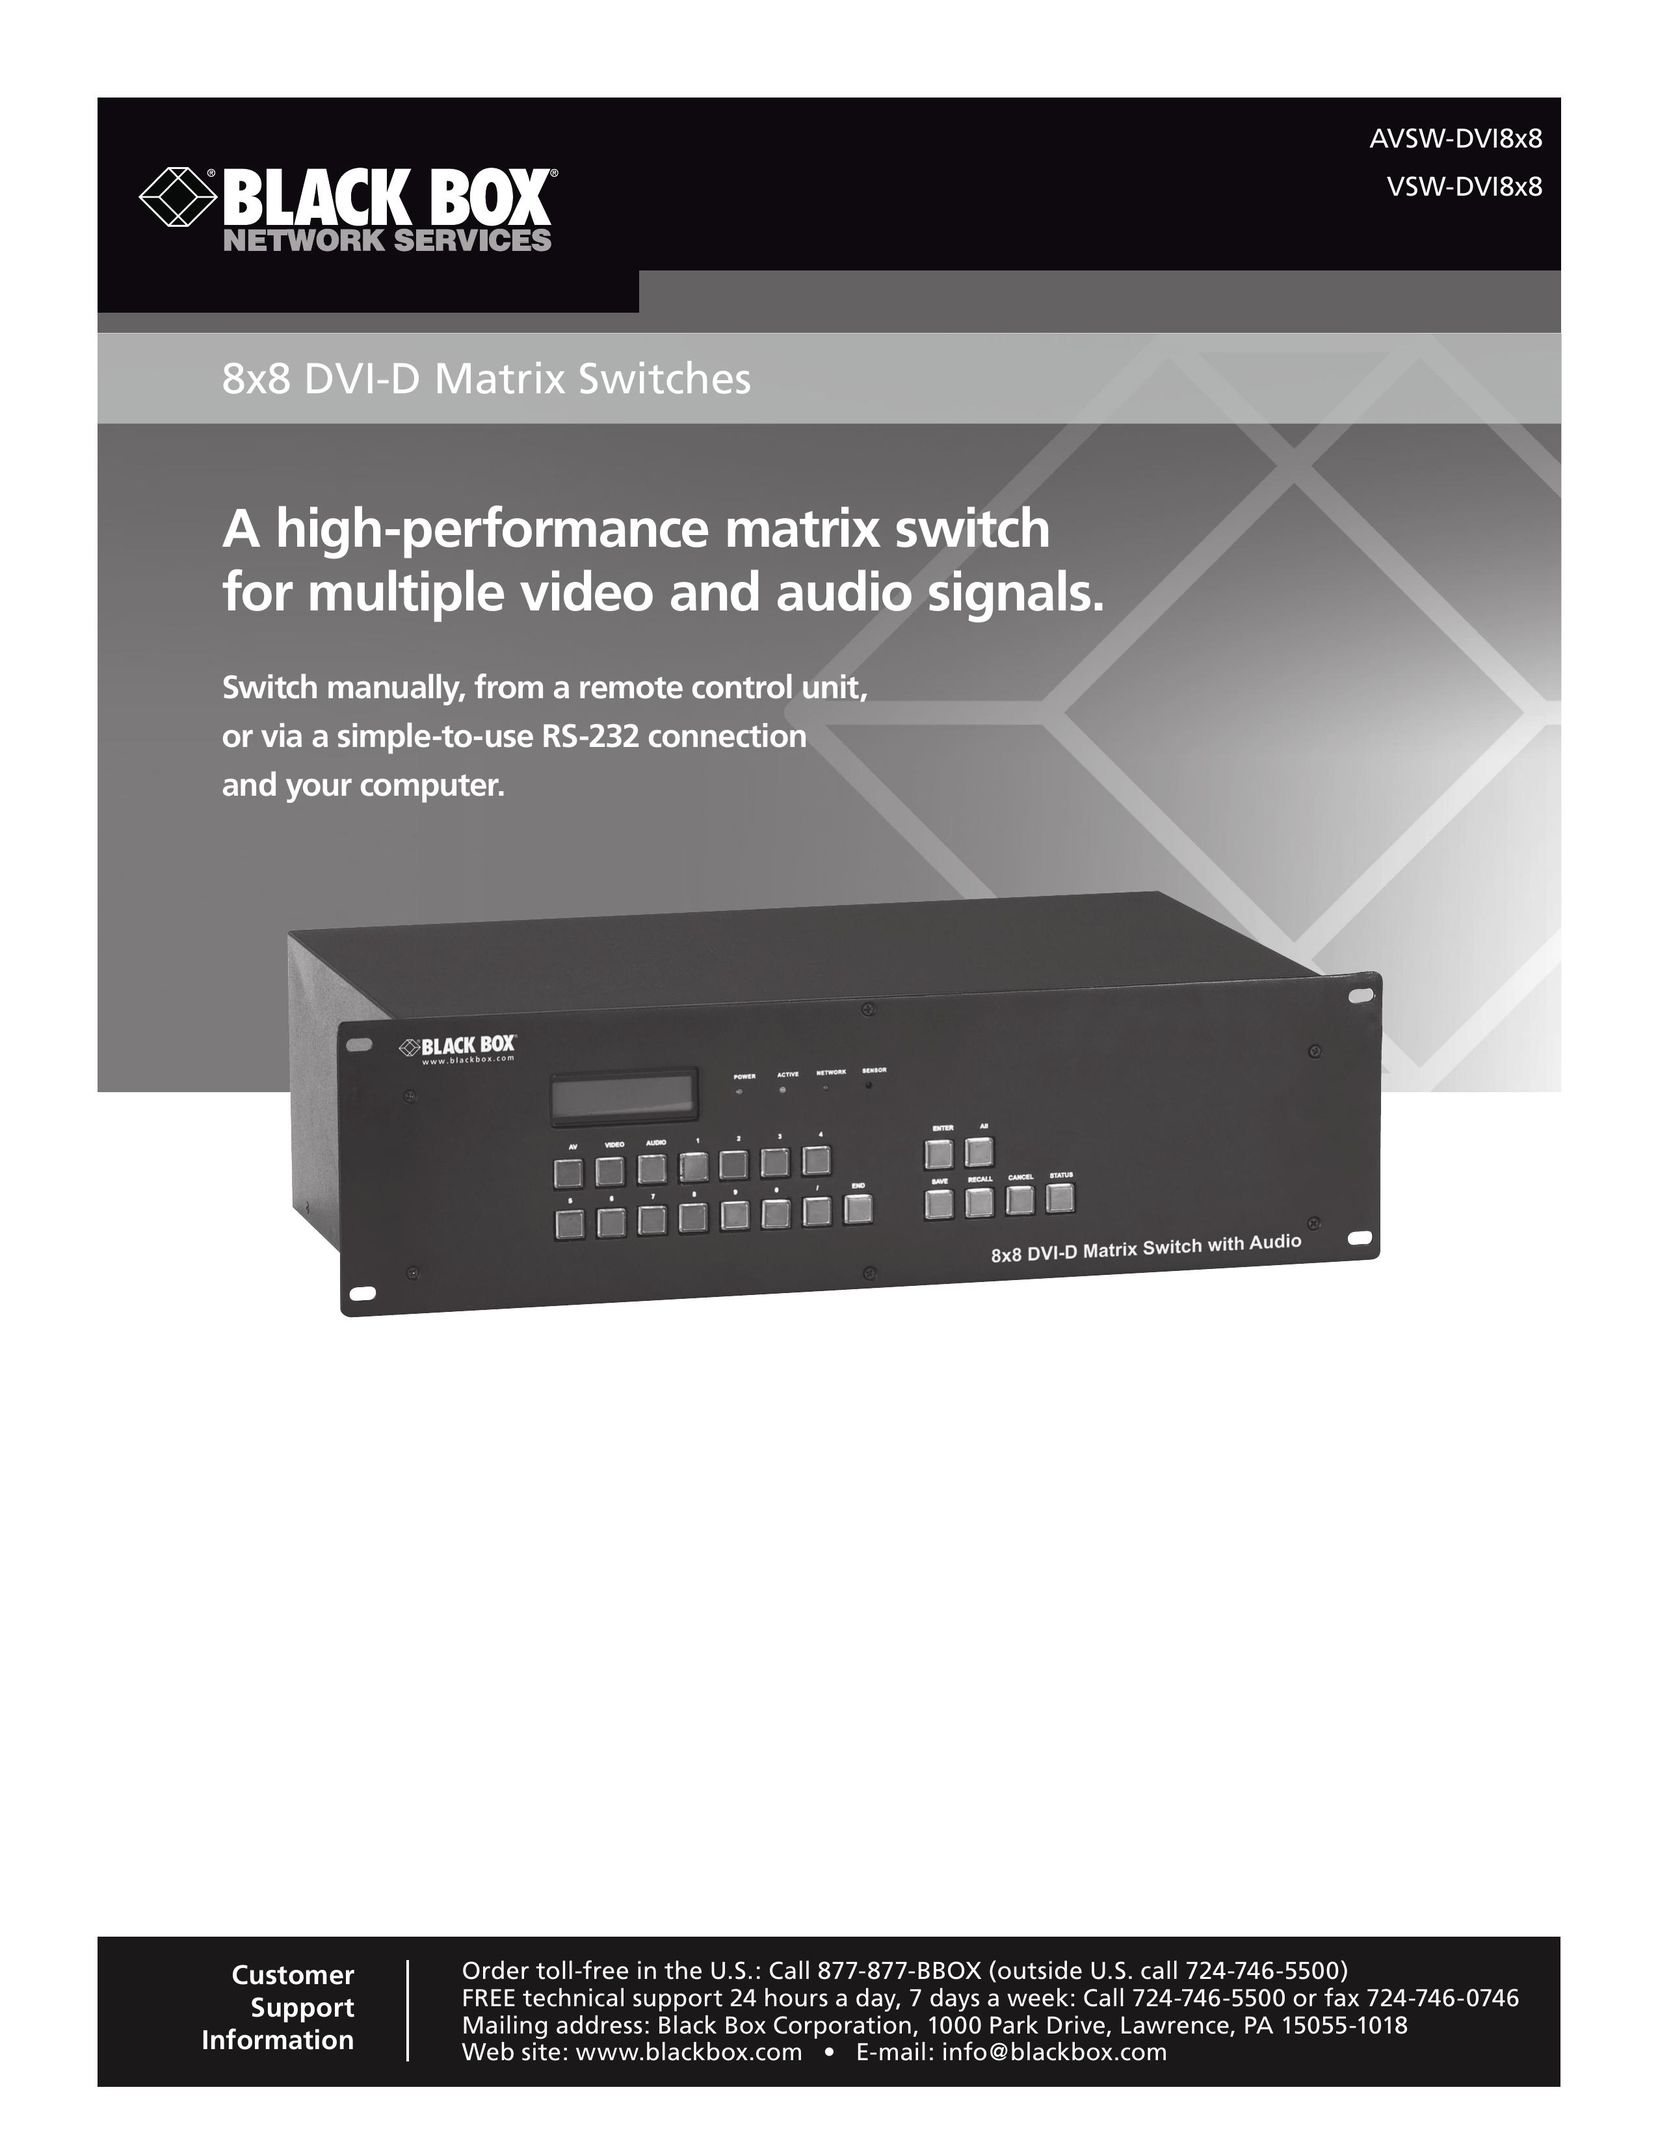 Black Box 8x8 DVI-D Matrix Switches Network Hardware User Manual